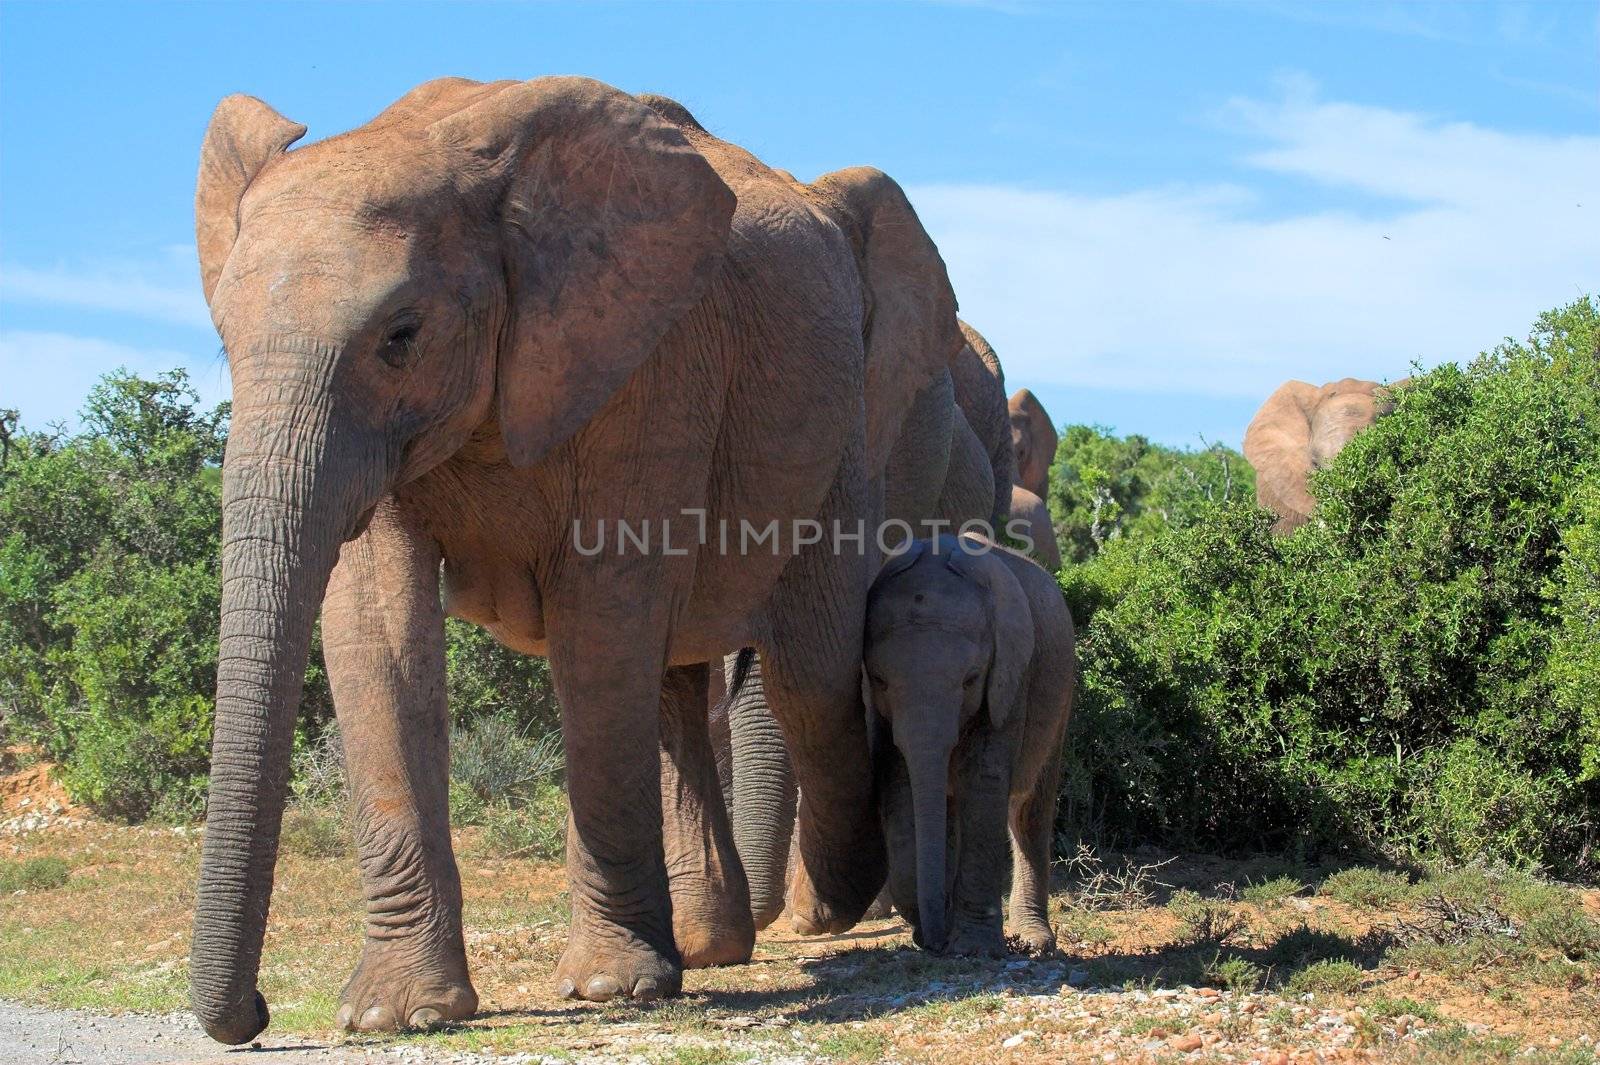 Elephant family in the African bush by nightowlza